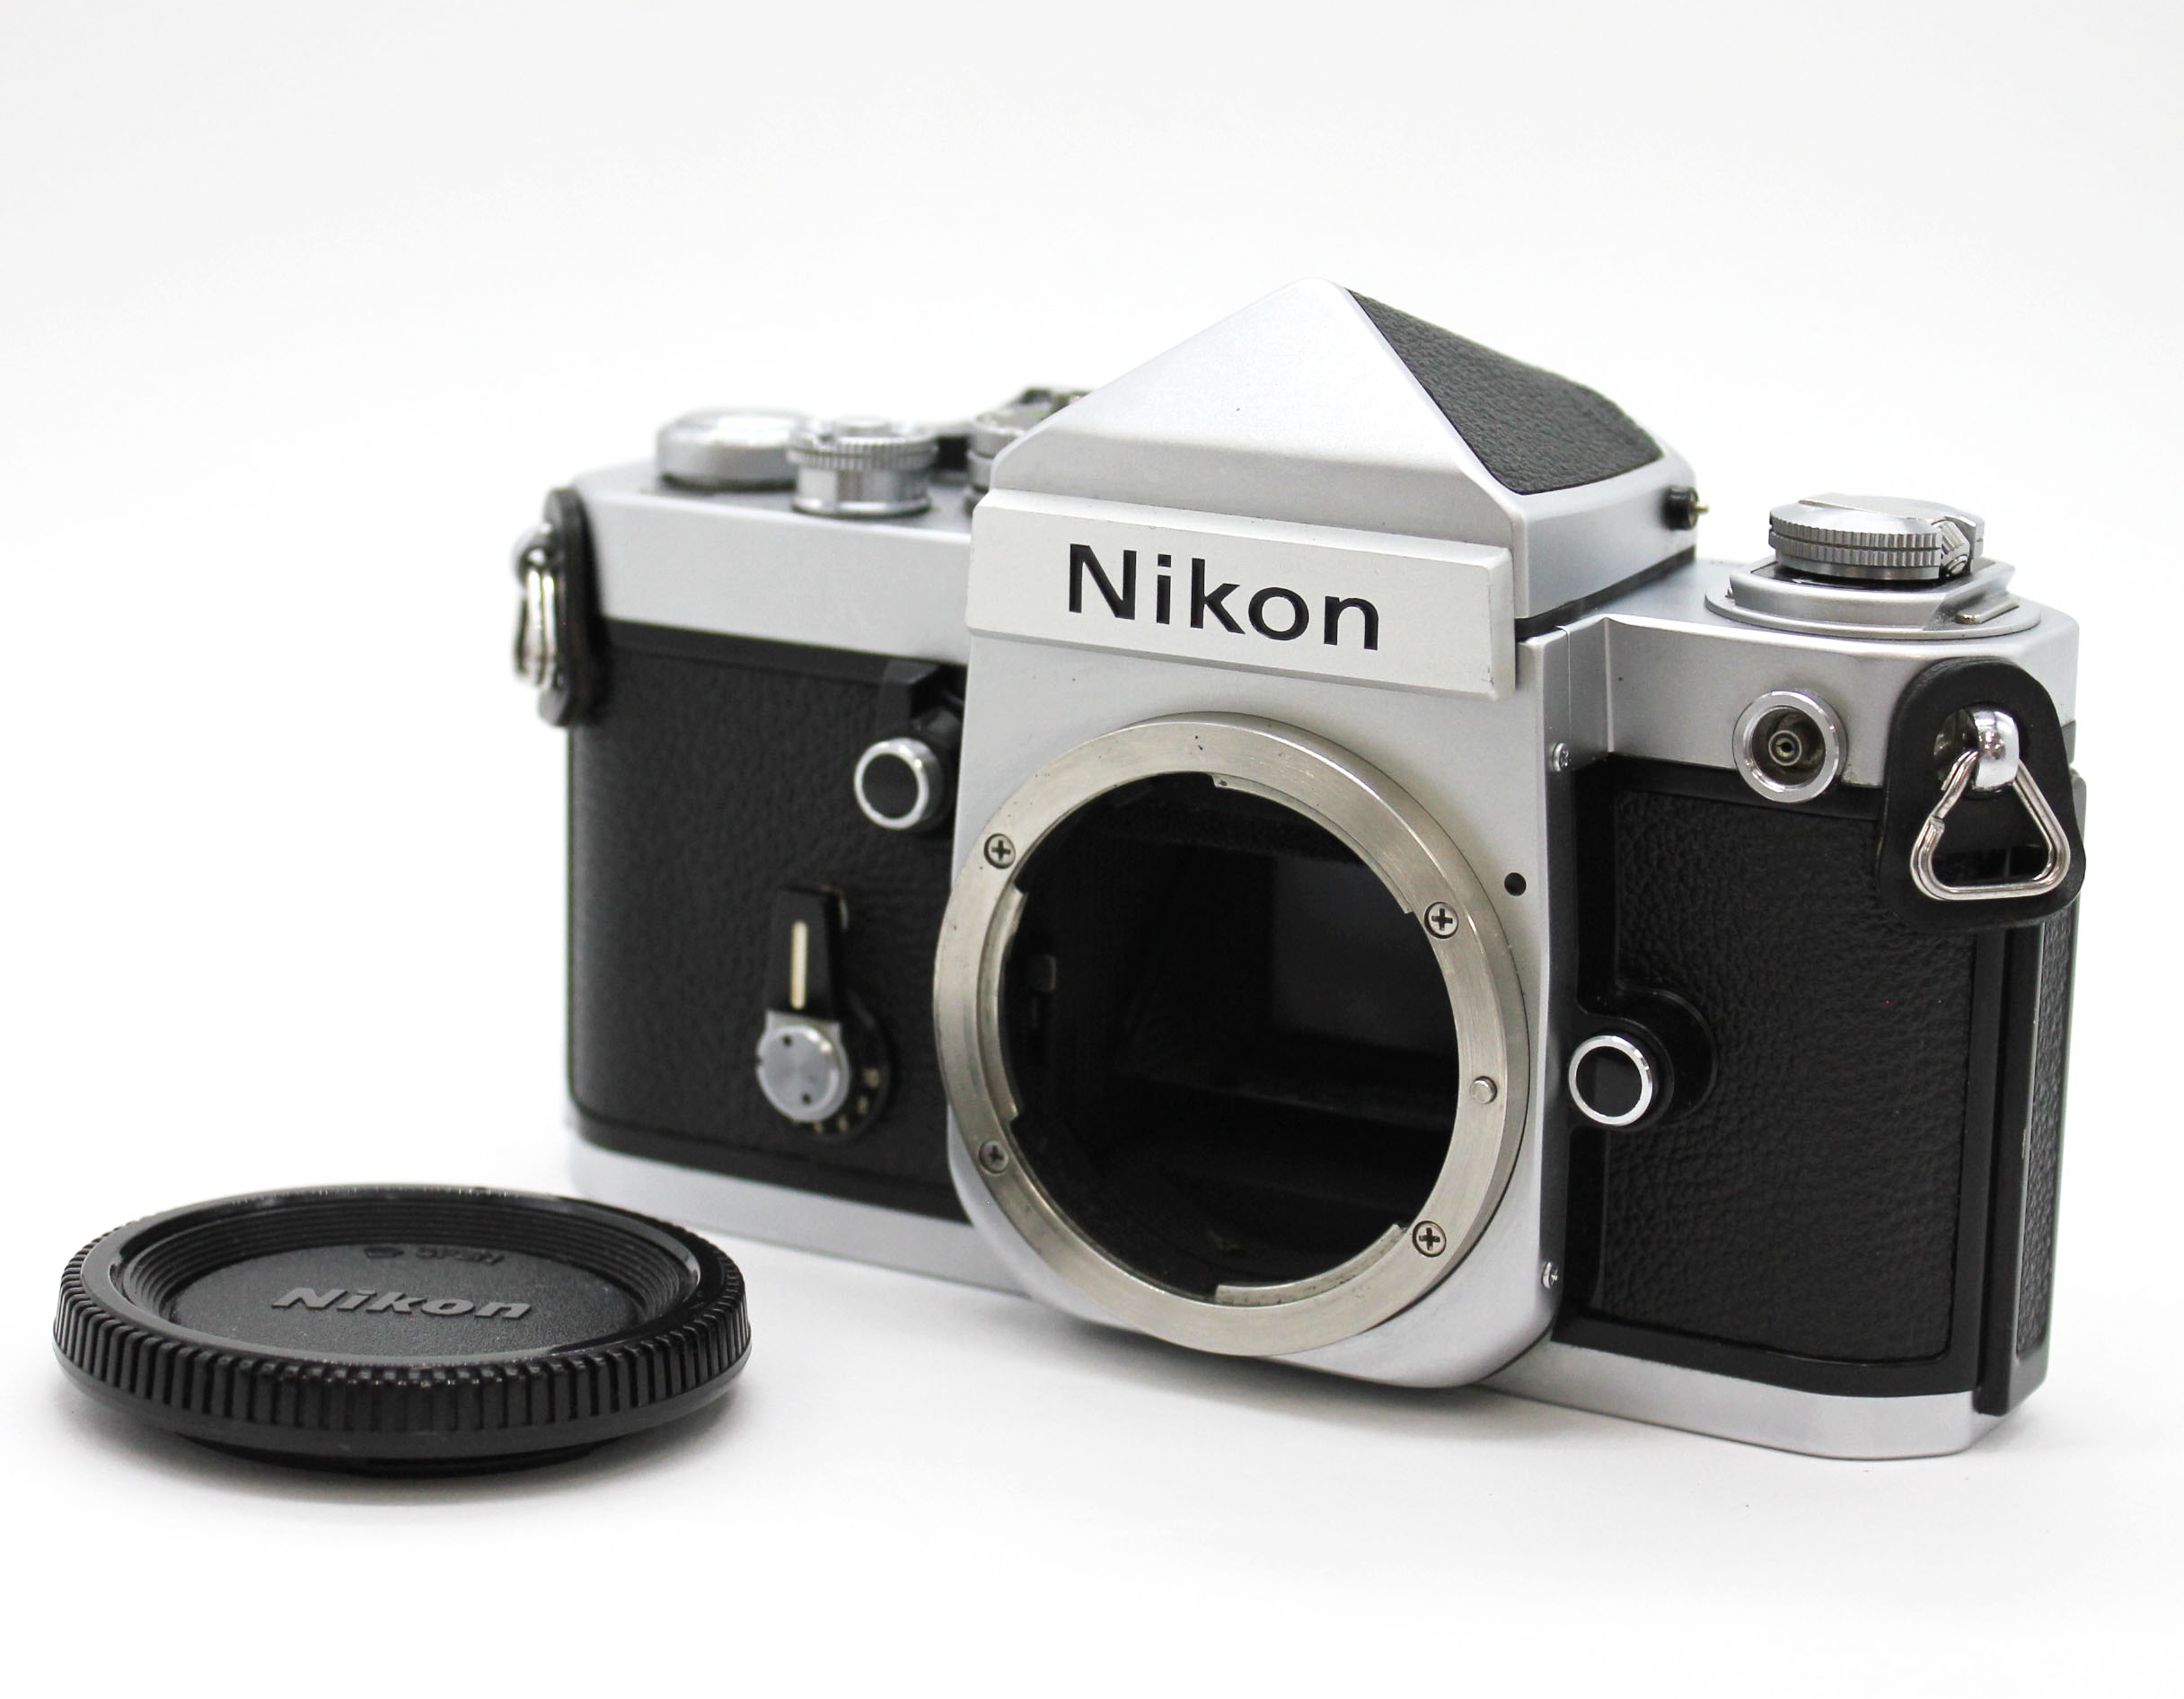  Nikon F2 Eye Level 35mm SLR Film Camera S/N 784* w/ DE-1 View Finder from Japan Photo 0